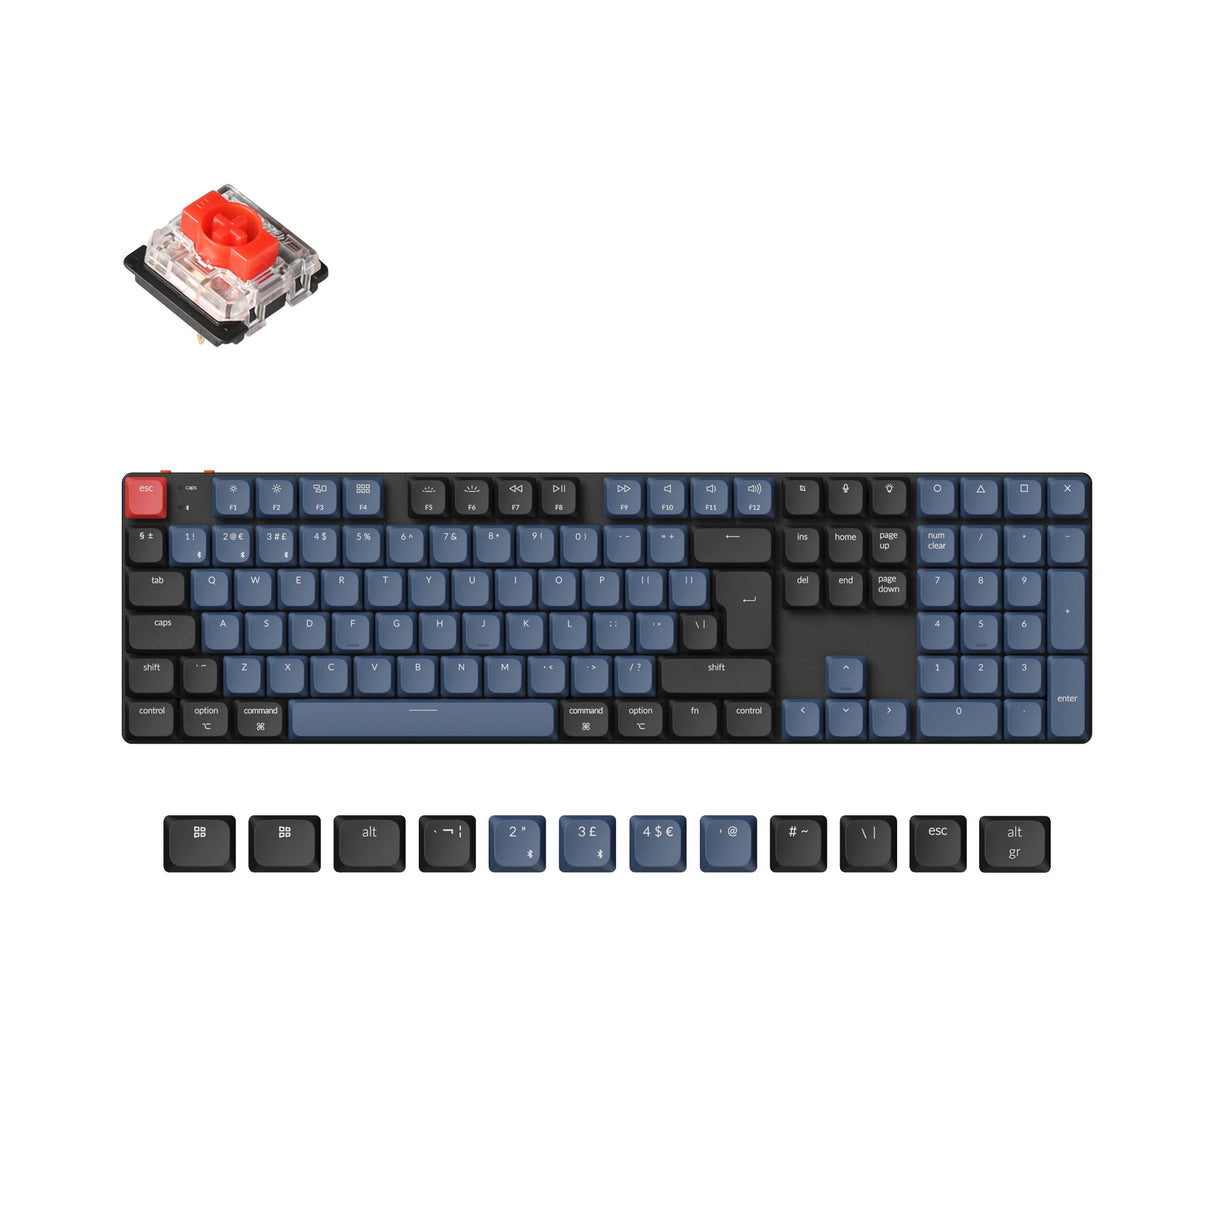 Keychron K5 Pro QMK/VIA ultra-slim custom mechanical keyboard full size layout for Mac Windows Linux low-profile Gateron red ISO UK layout